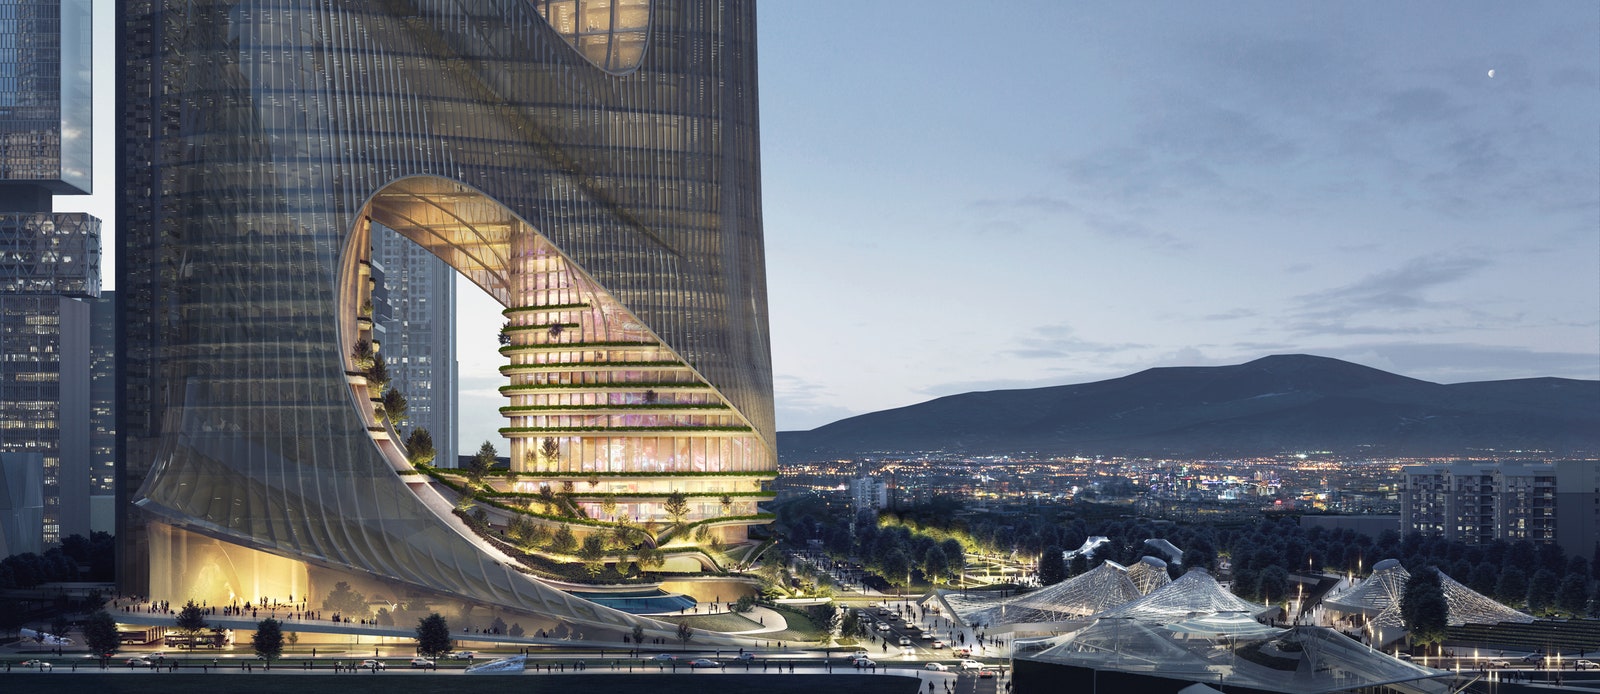 Небоскреб как продолжение парка новый проект от Zaha Hadid Architects